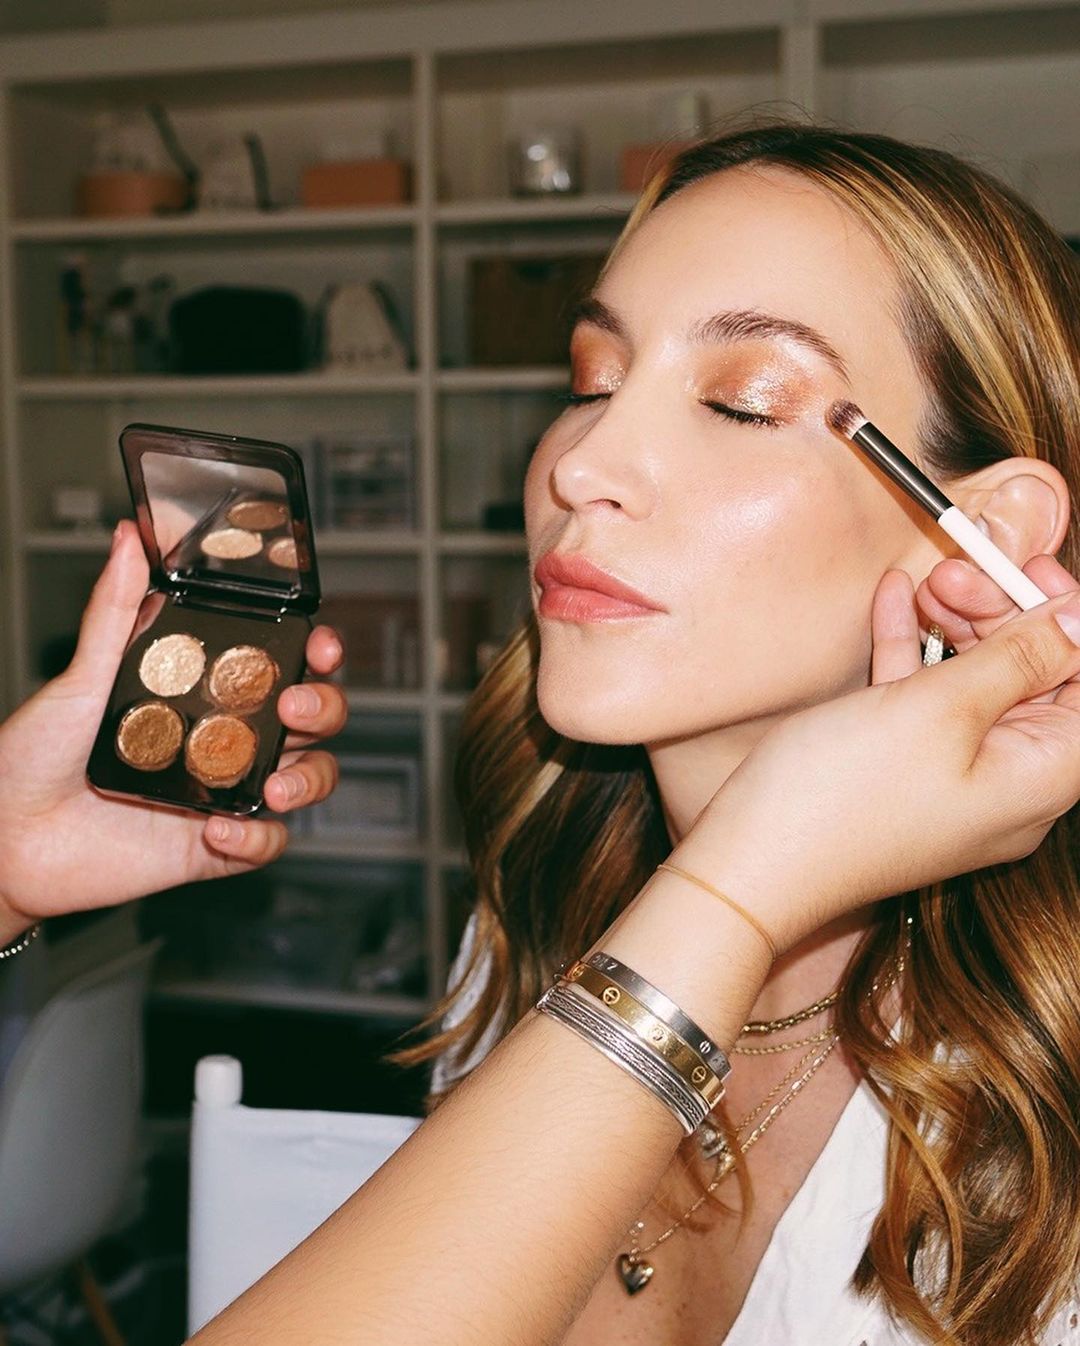 How to clean makeup brushes: Nikki de Roest applying eyeshadow